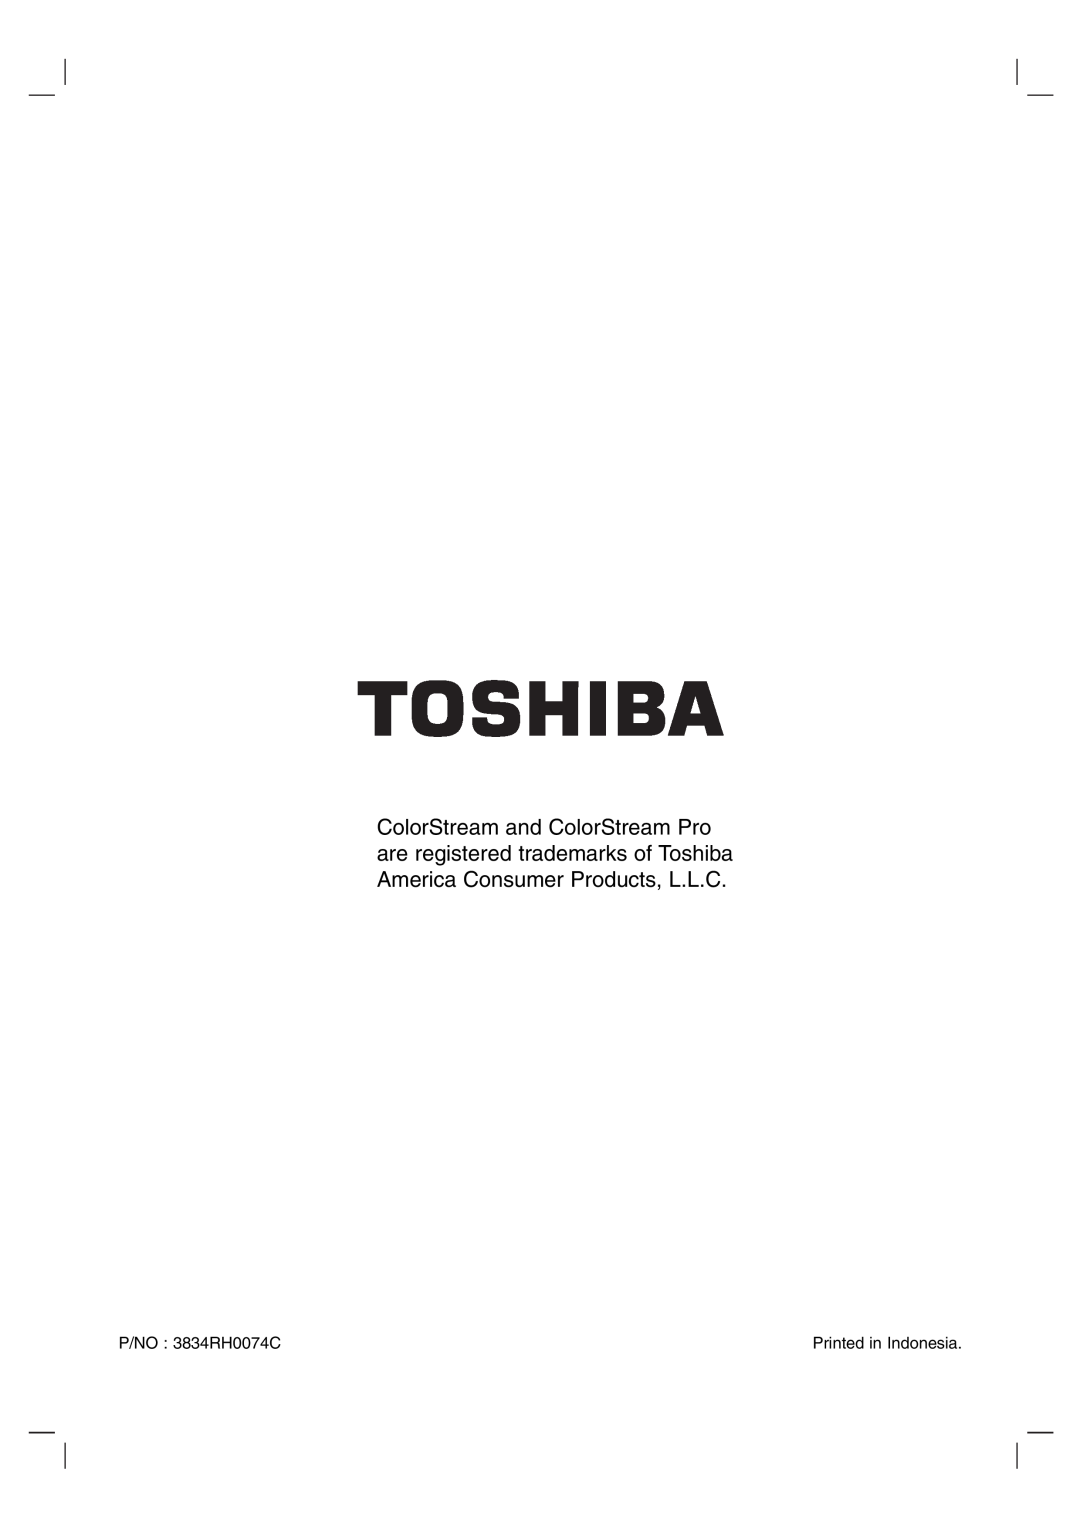 Toshiba SD-V57HTSU owner manual P/NO : 3834RH0074C, Printed in Indonesia 